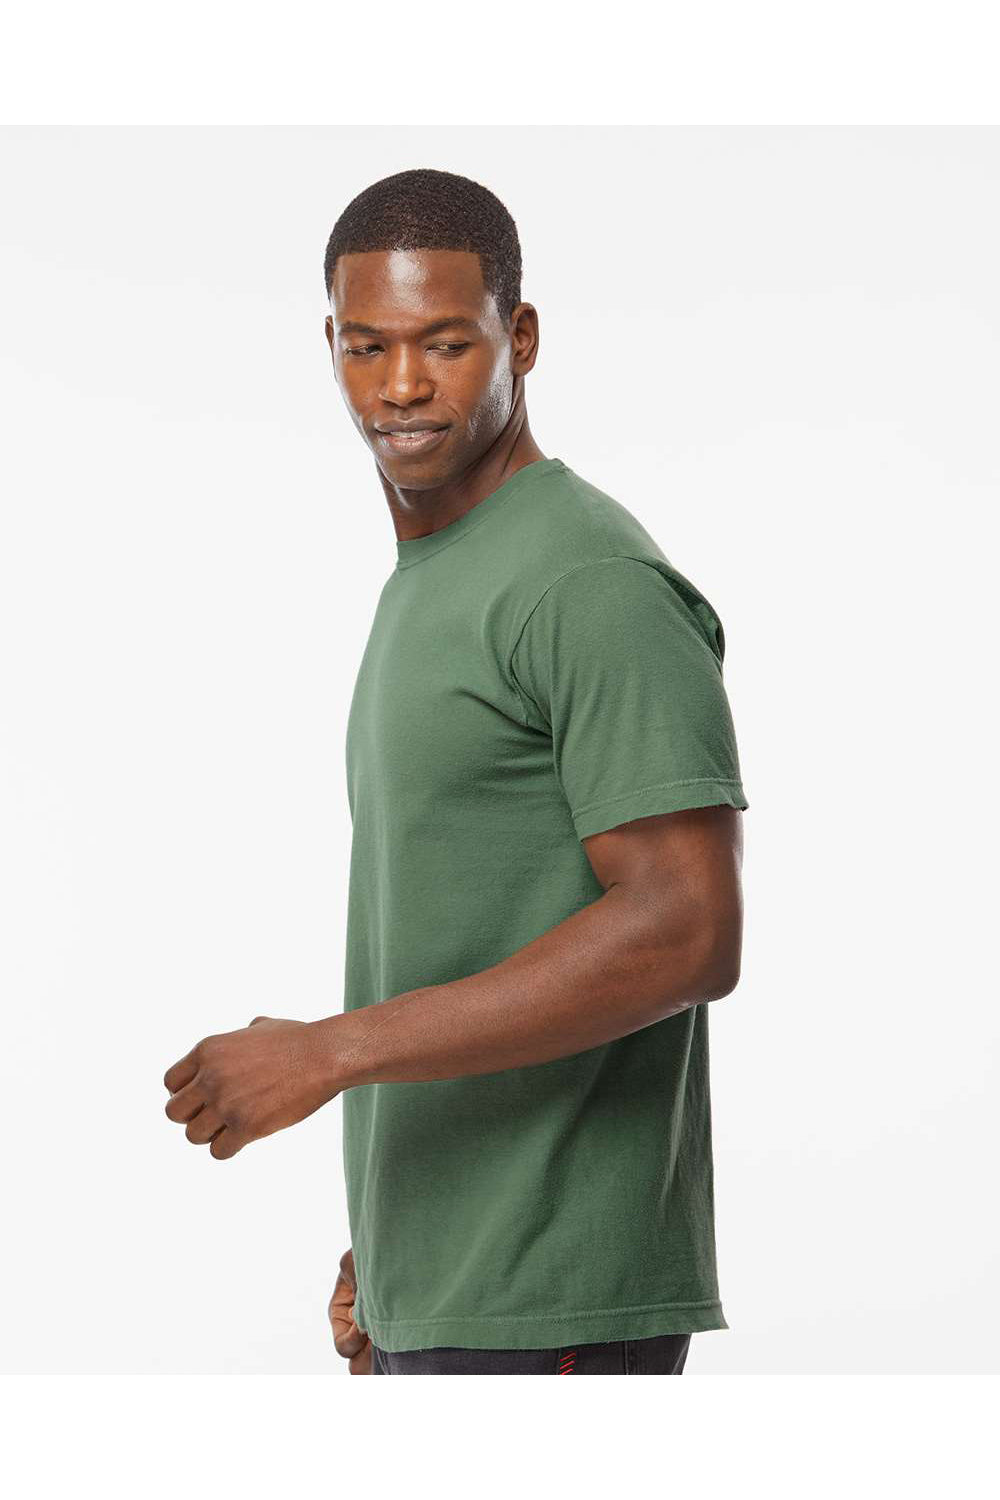 M&O 6500M Mens Vintage Garment Dyed Short Sleeve Crewneck T-Shirt Light Green Model Side